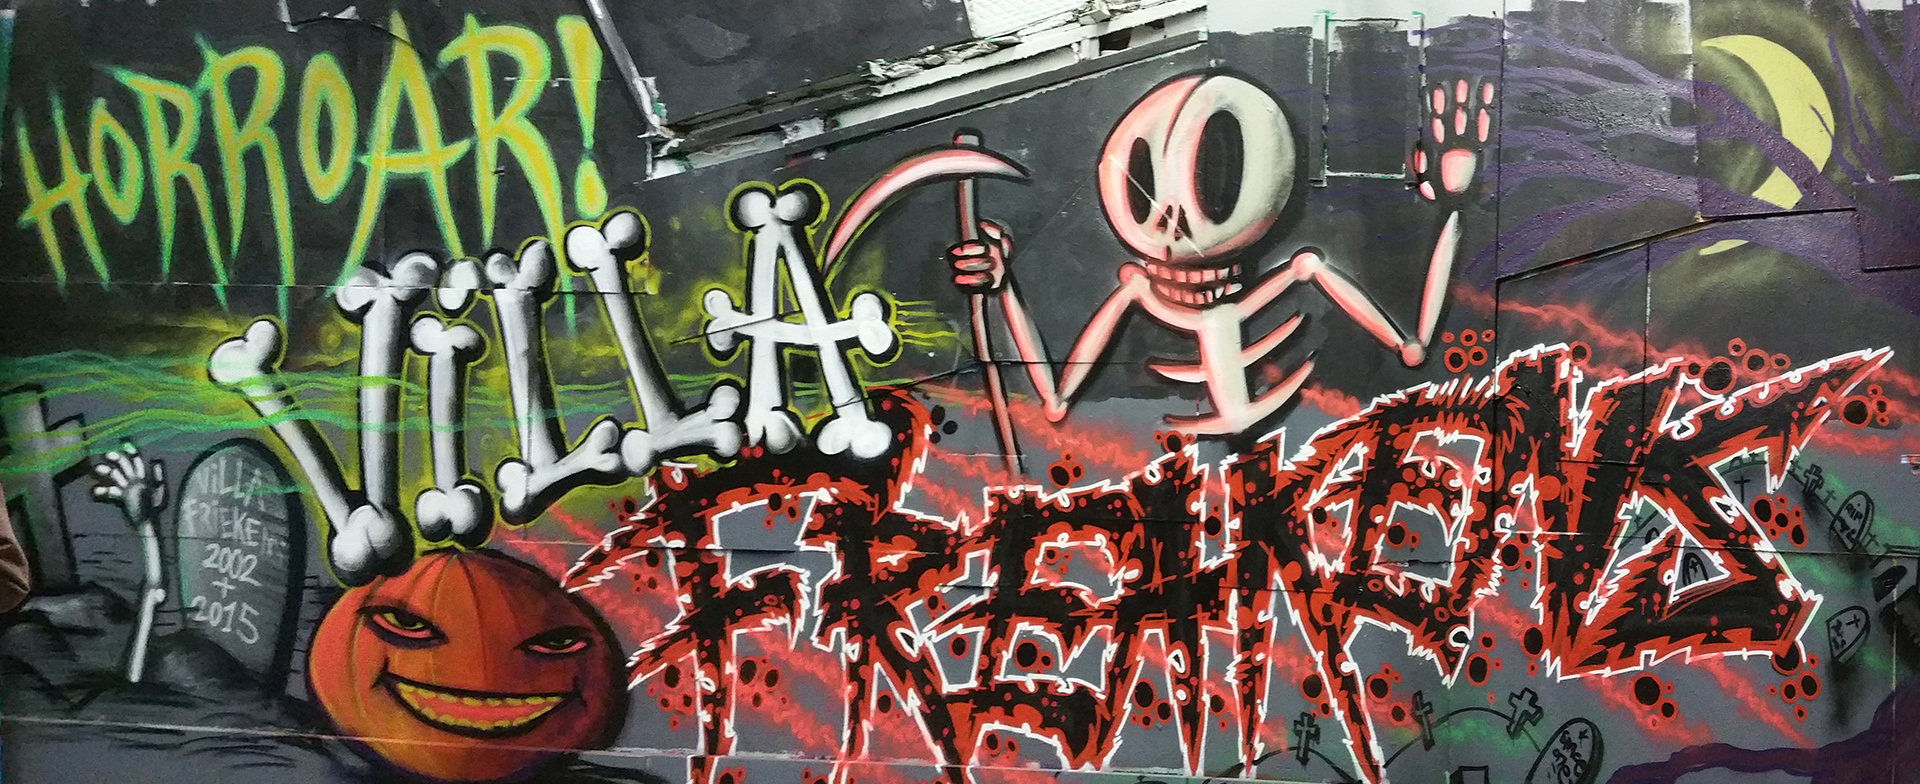 Helloween graffiti